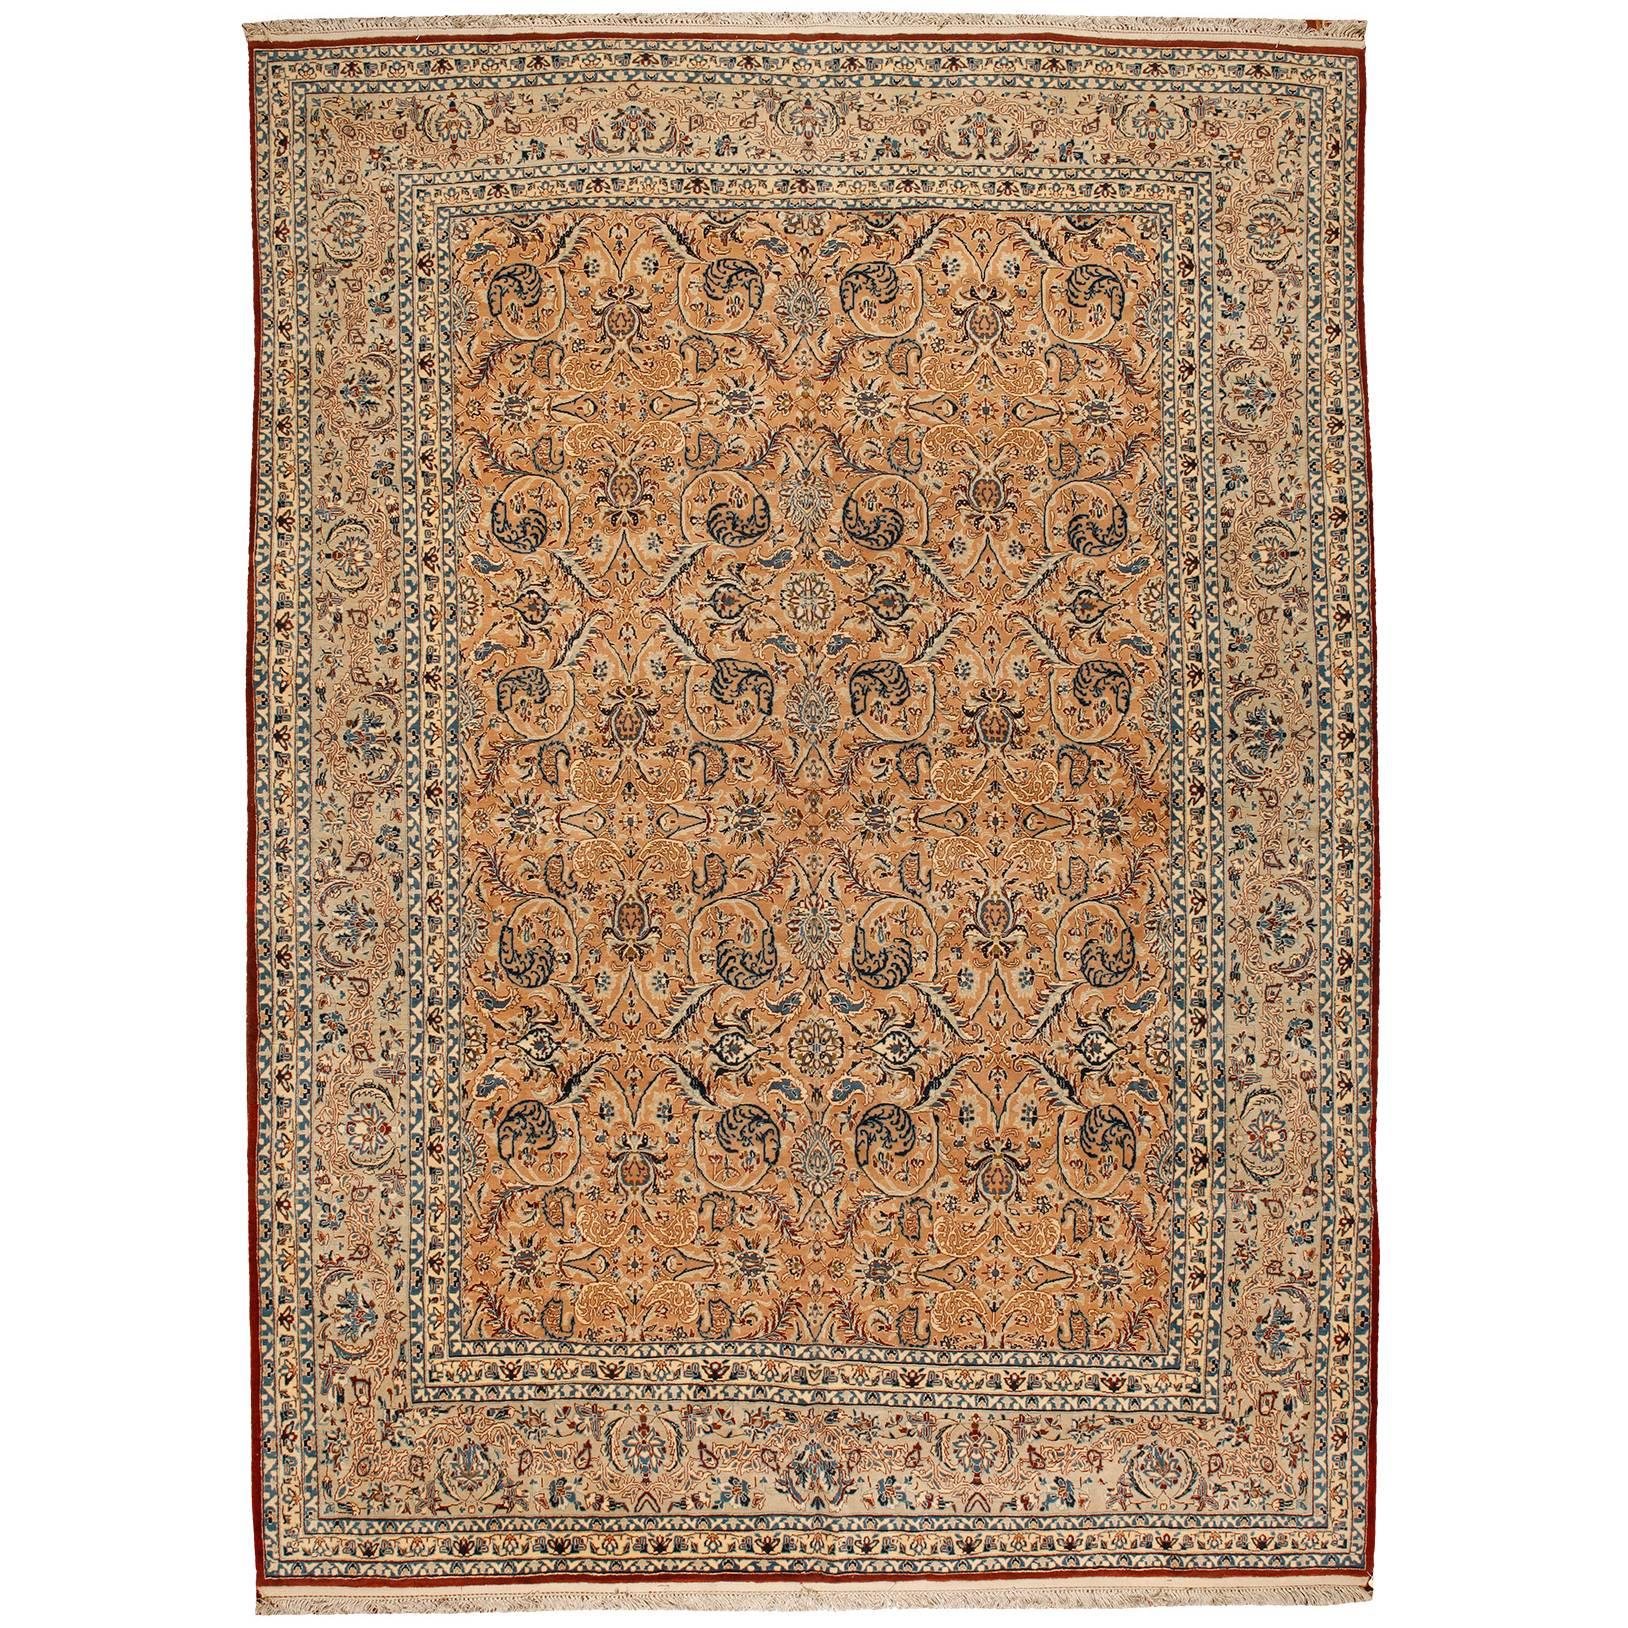 Exceptional Fine Persian Nain Carpet For Sale